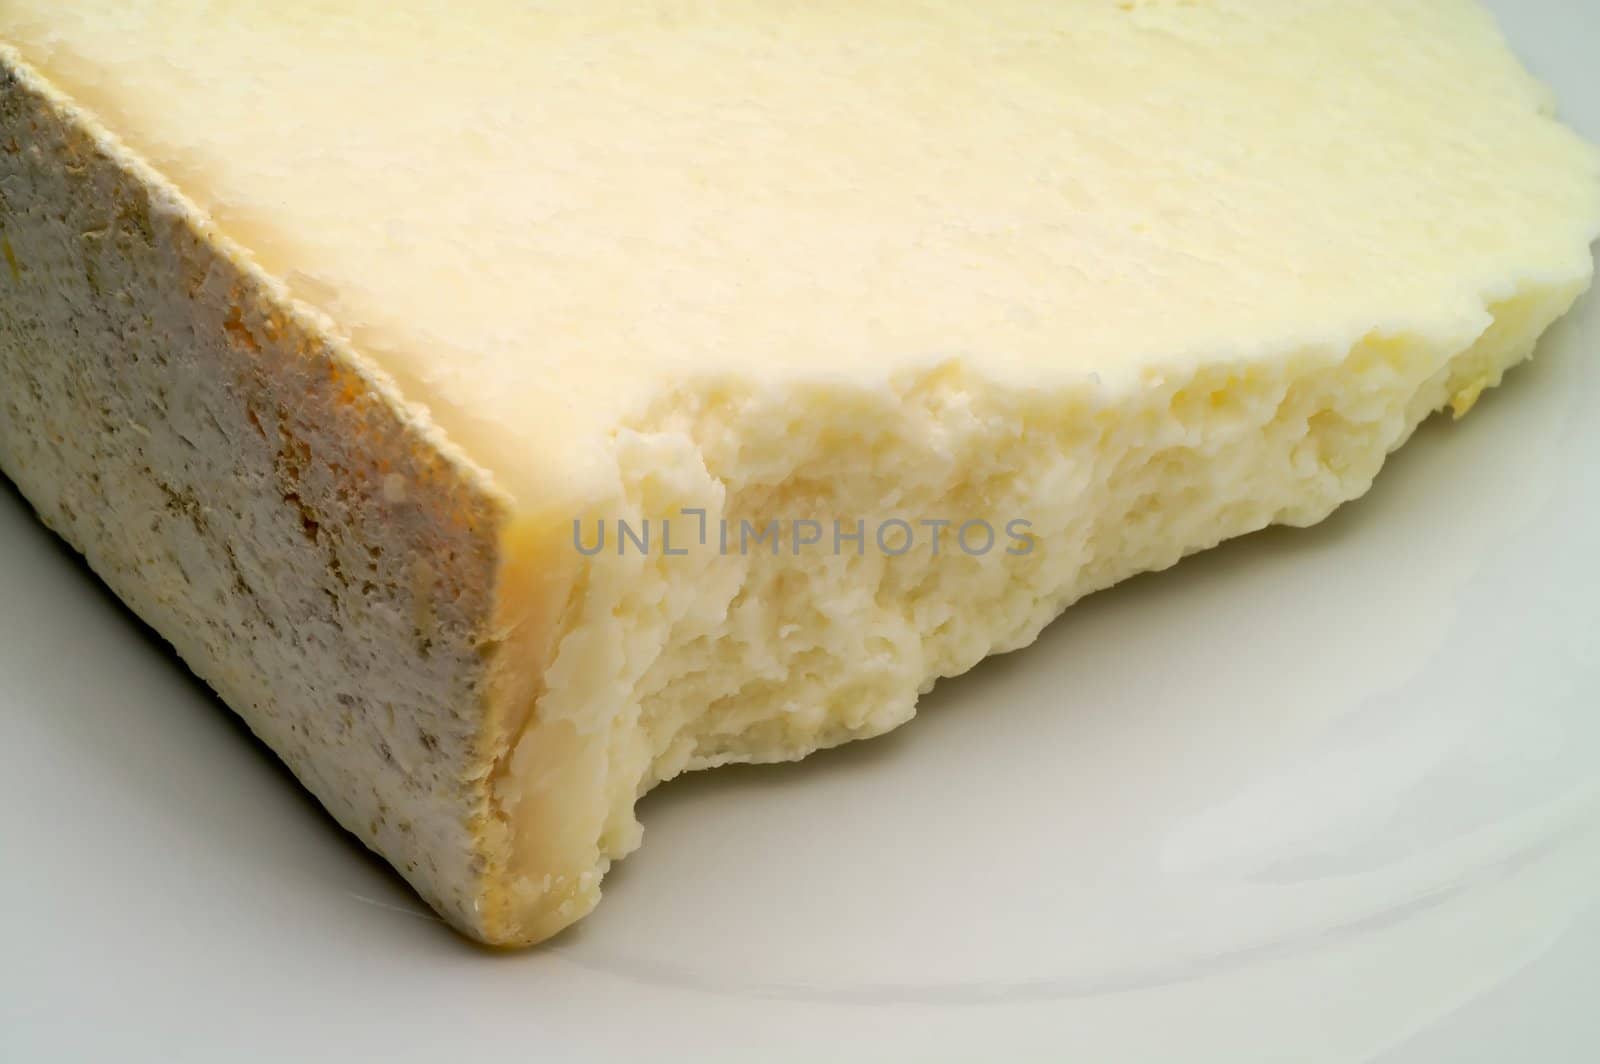 Aged cheese closeup (2): Castelmagno